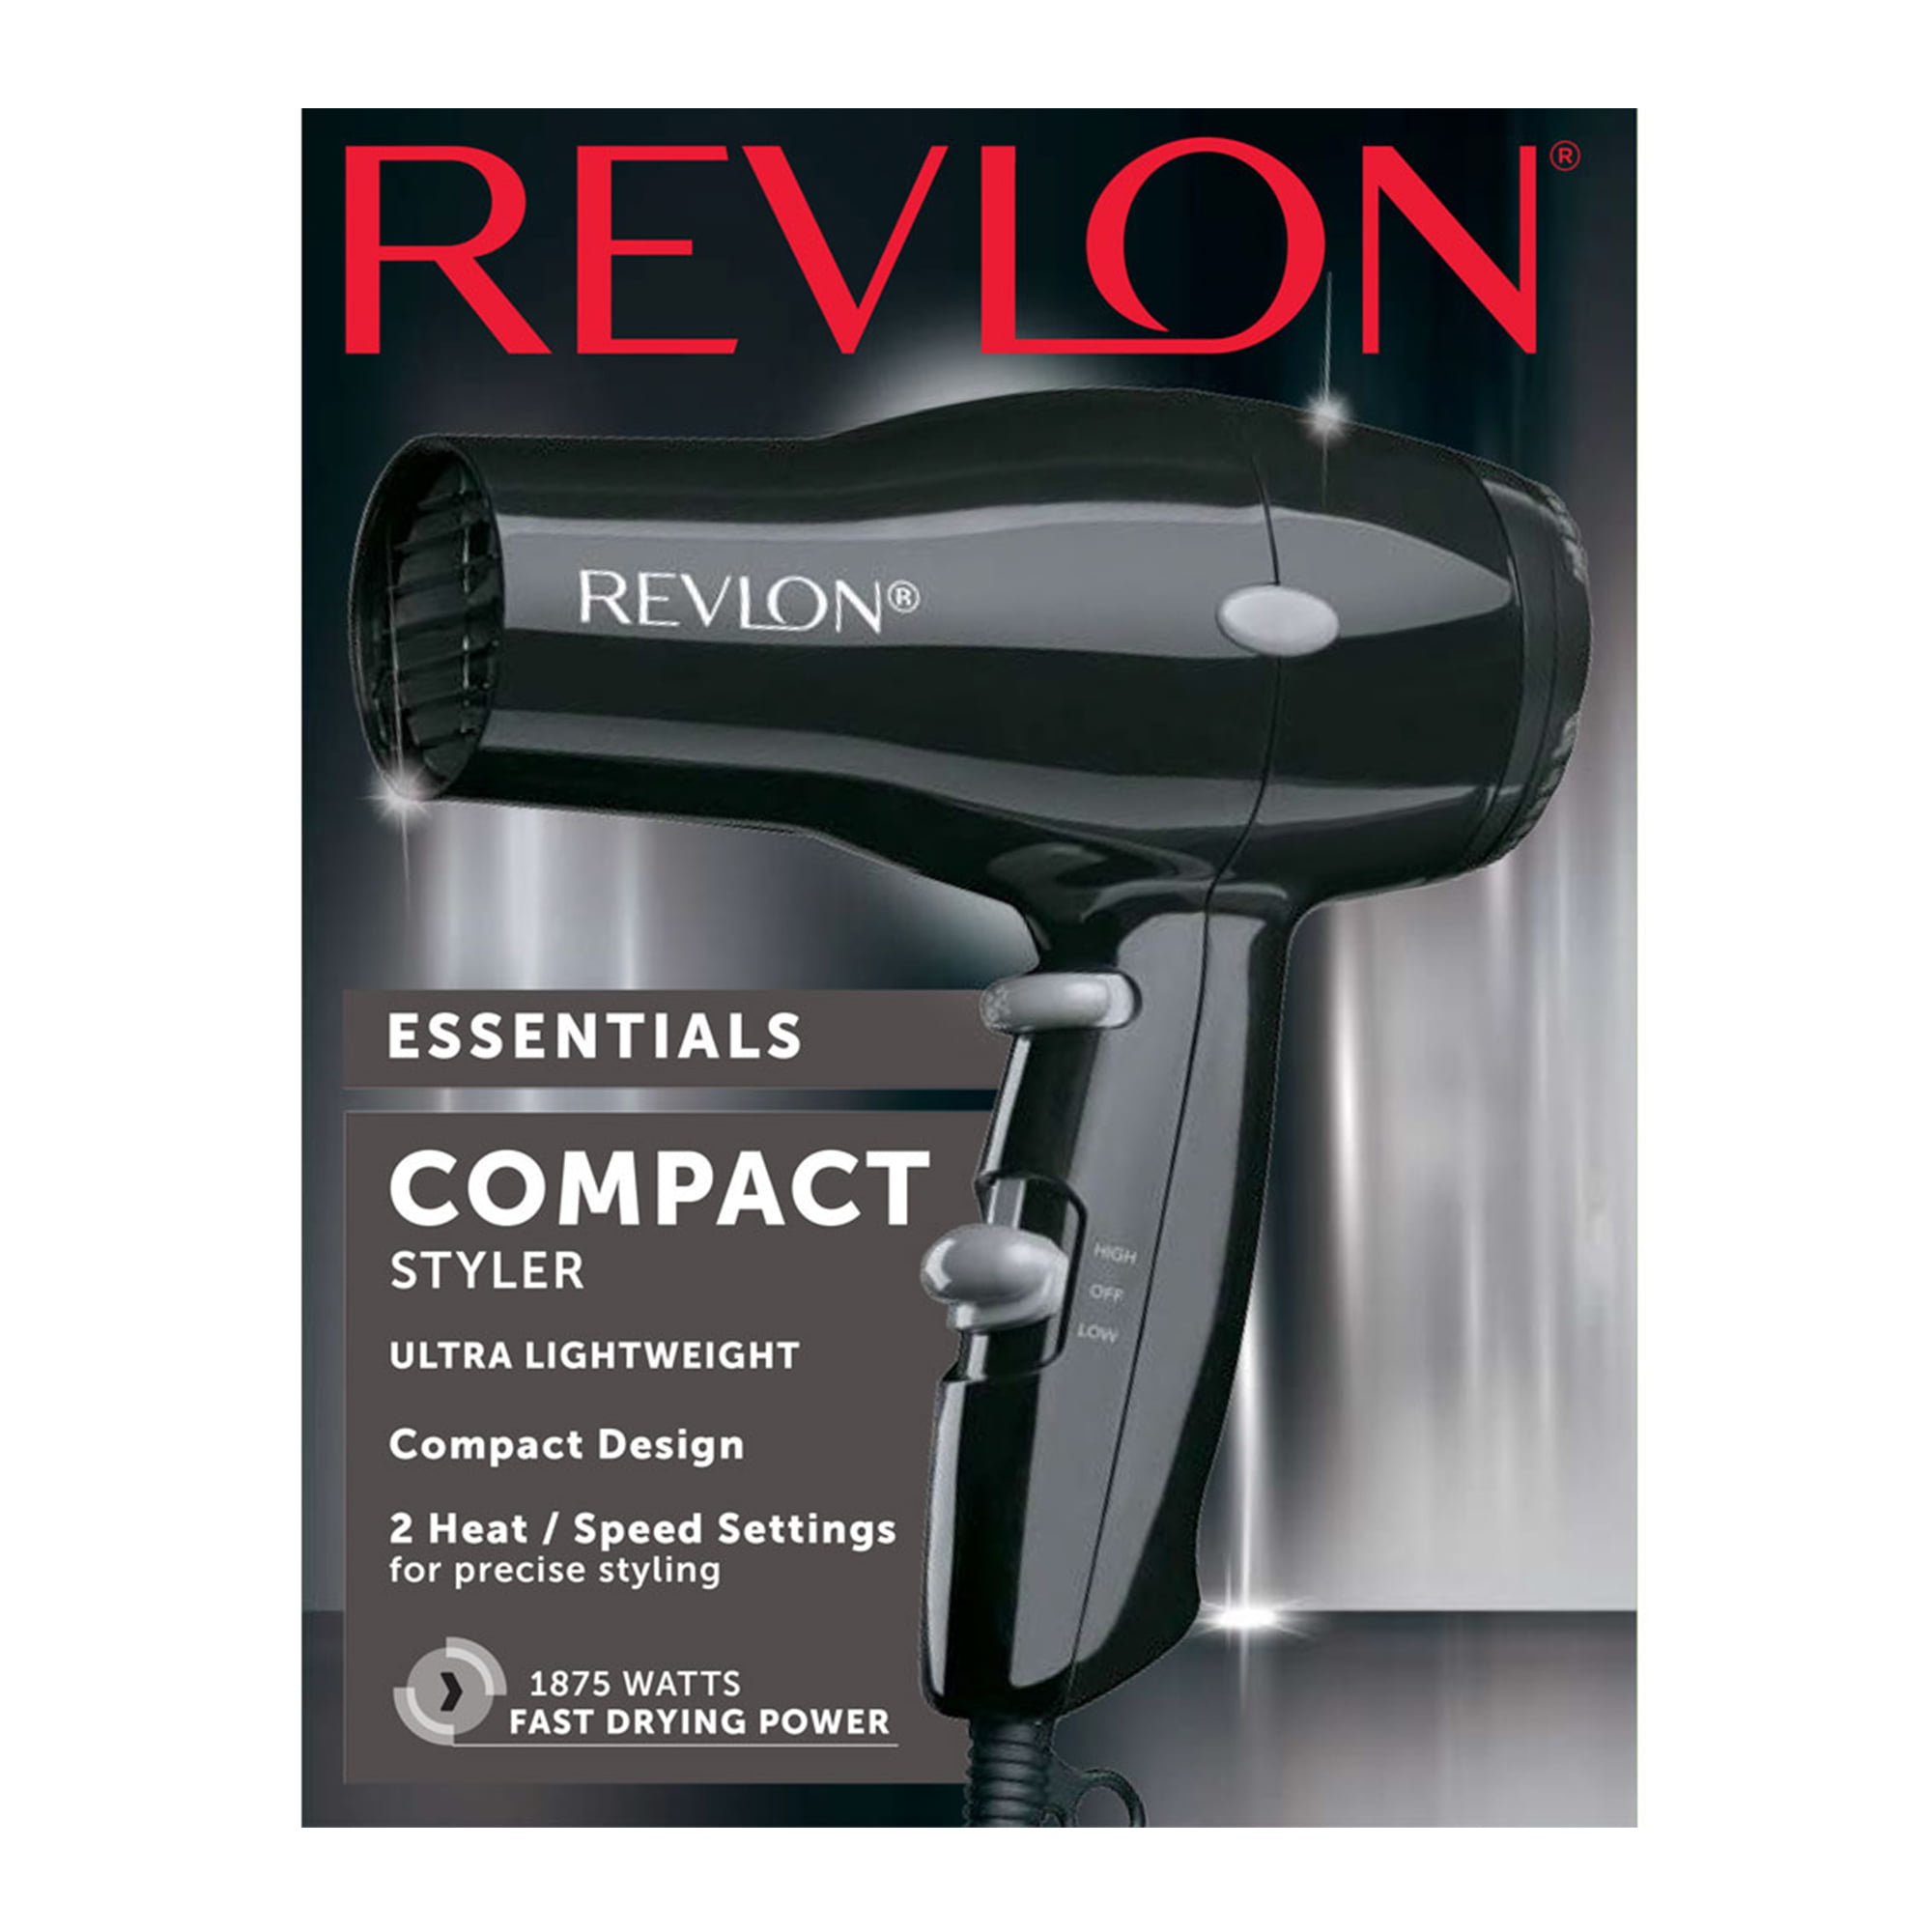 Revlon 1875W Compact Travel Hair Dryer, Black